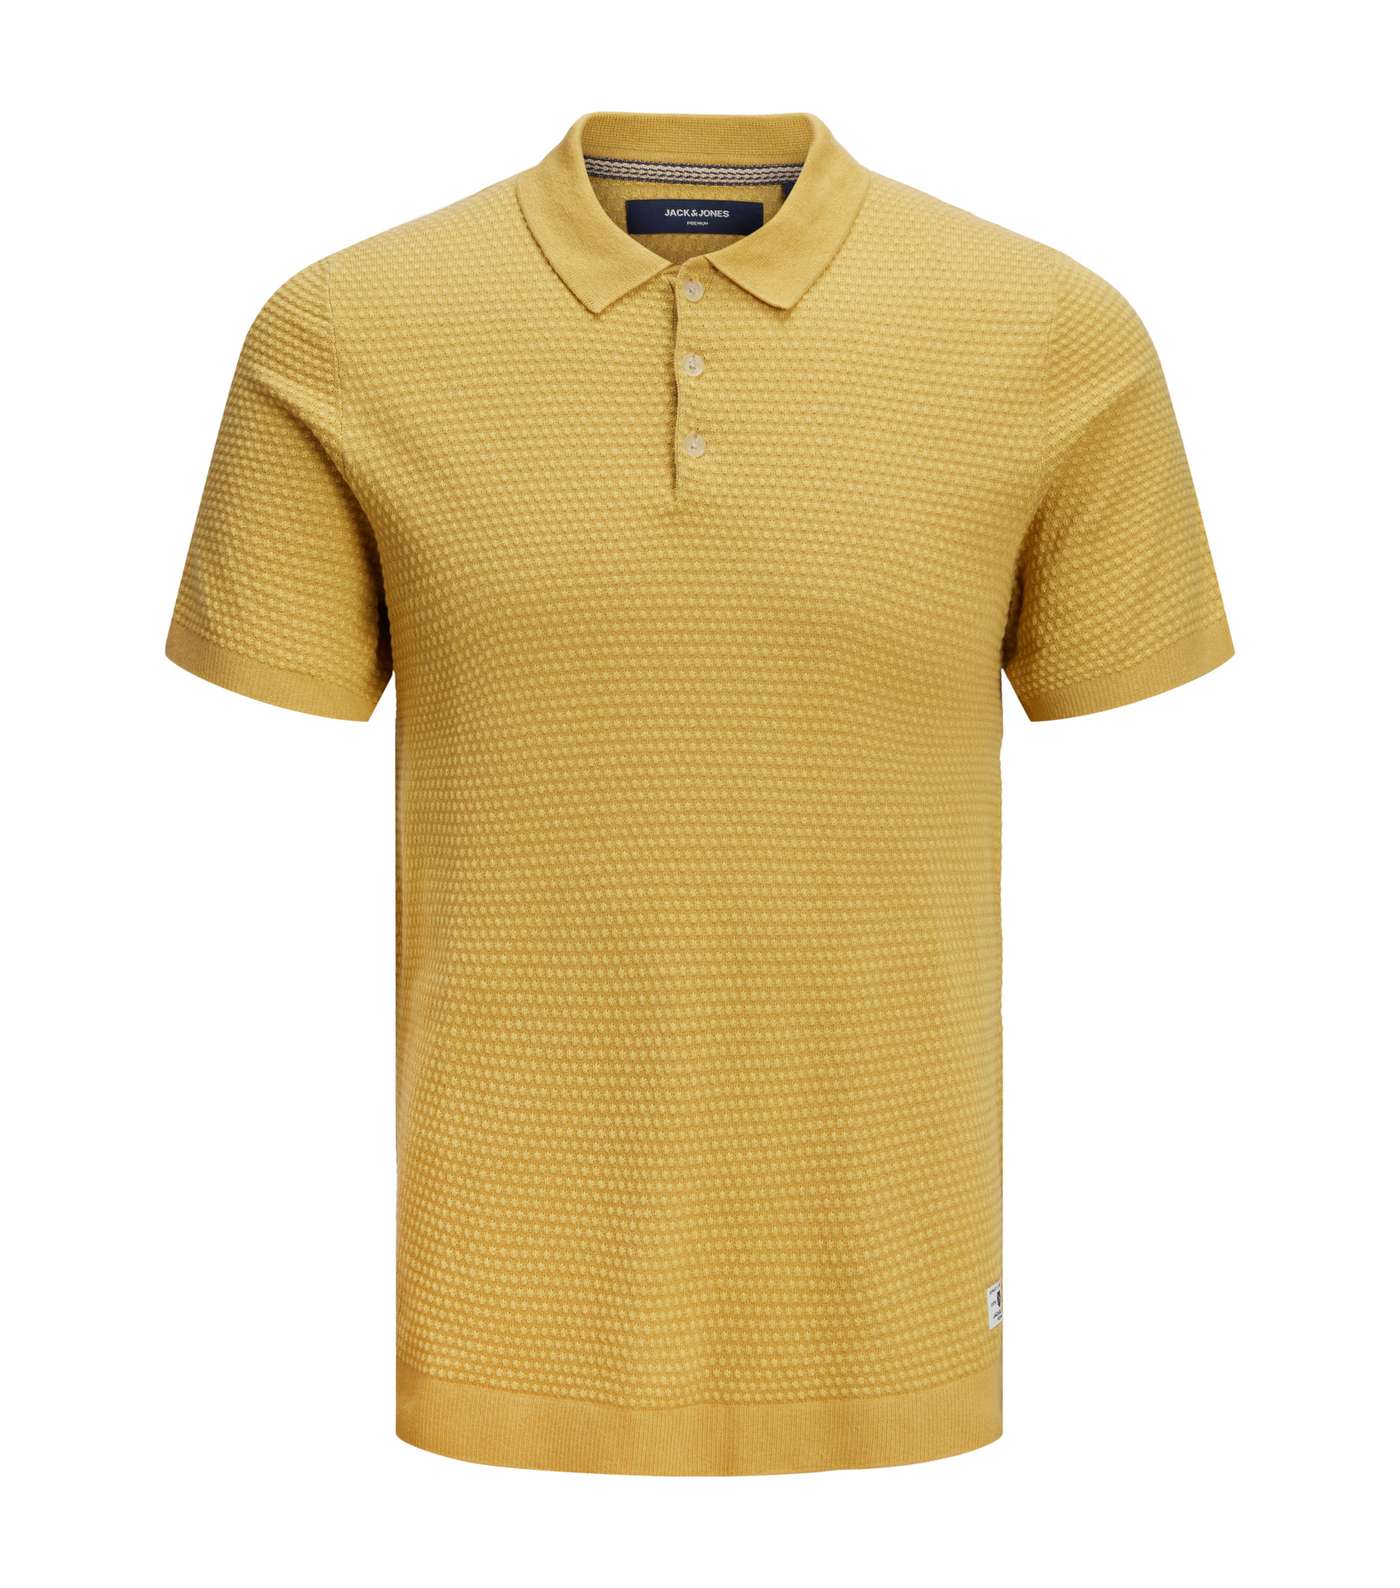 Jack & Jones Mustard Knit Polo Shirt Image 5